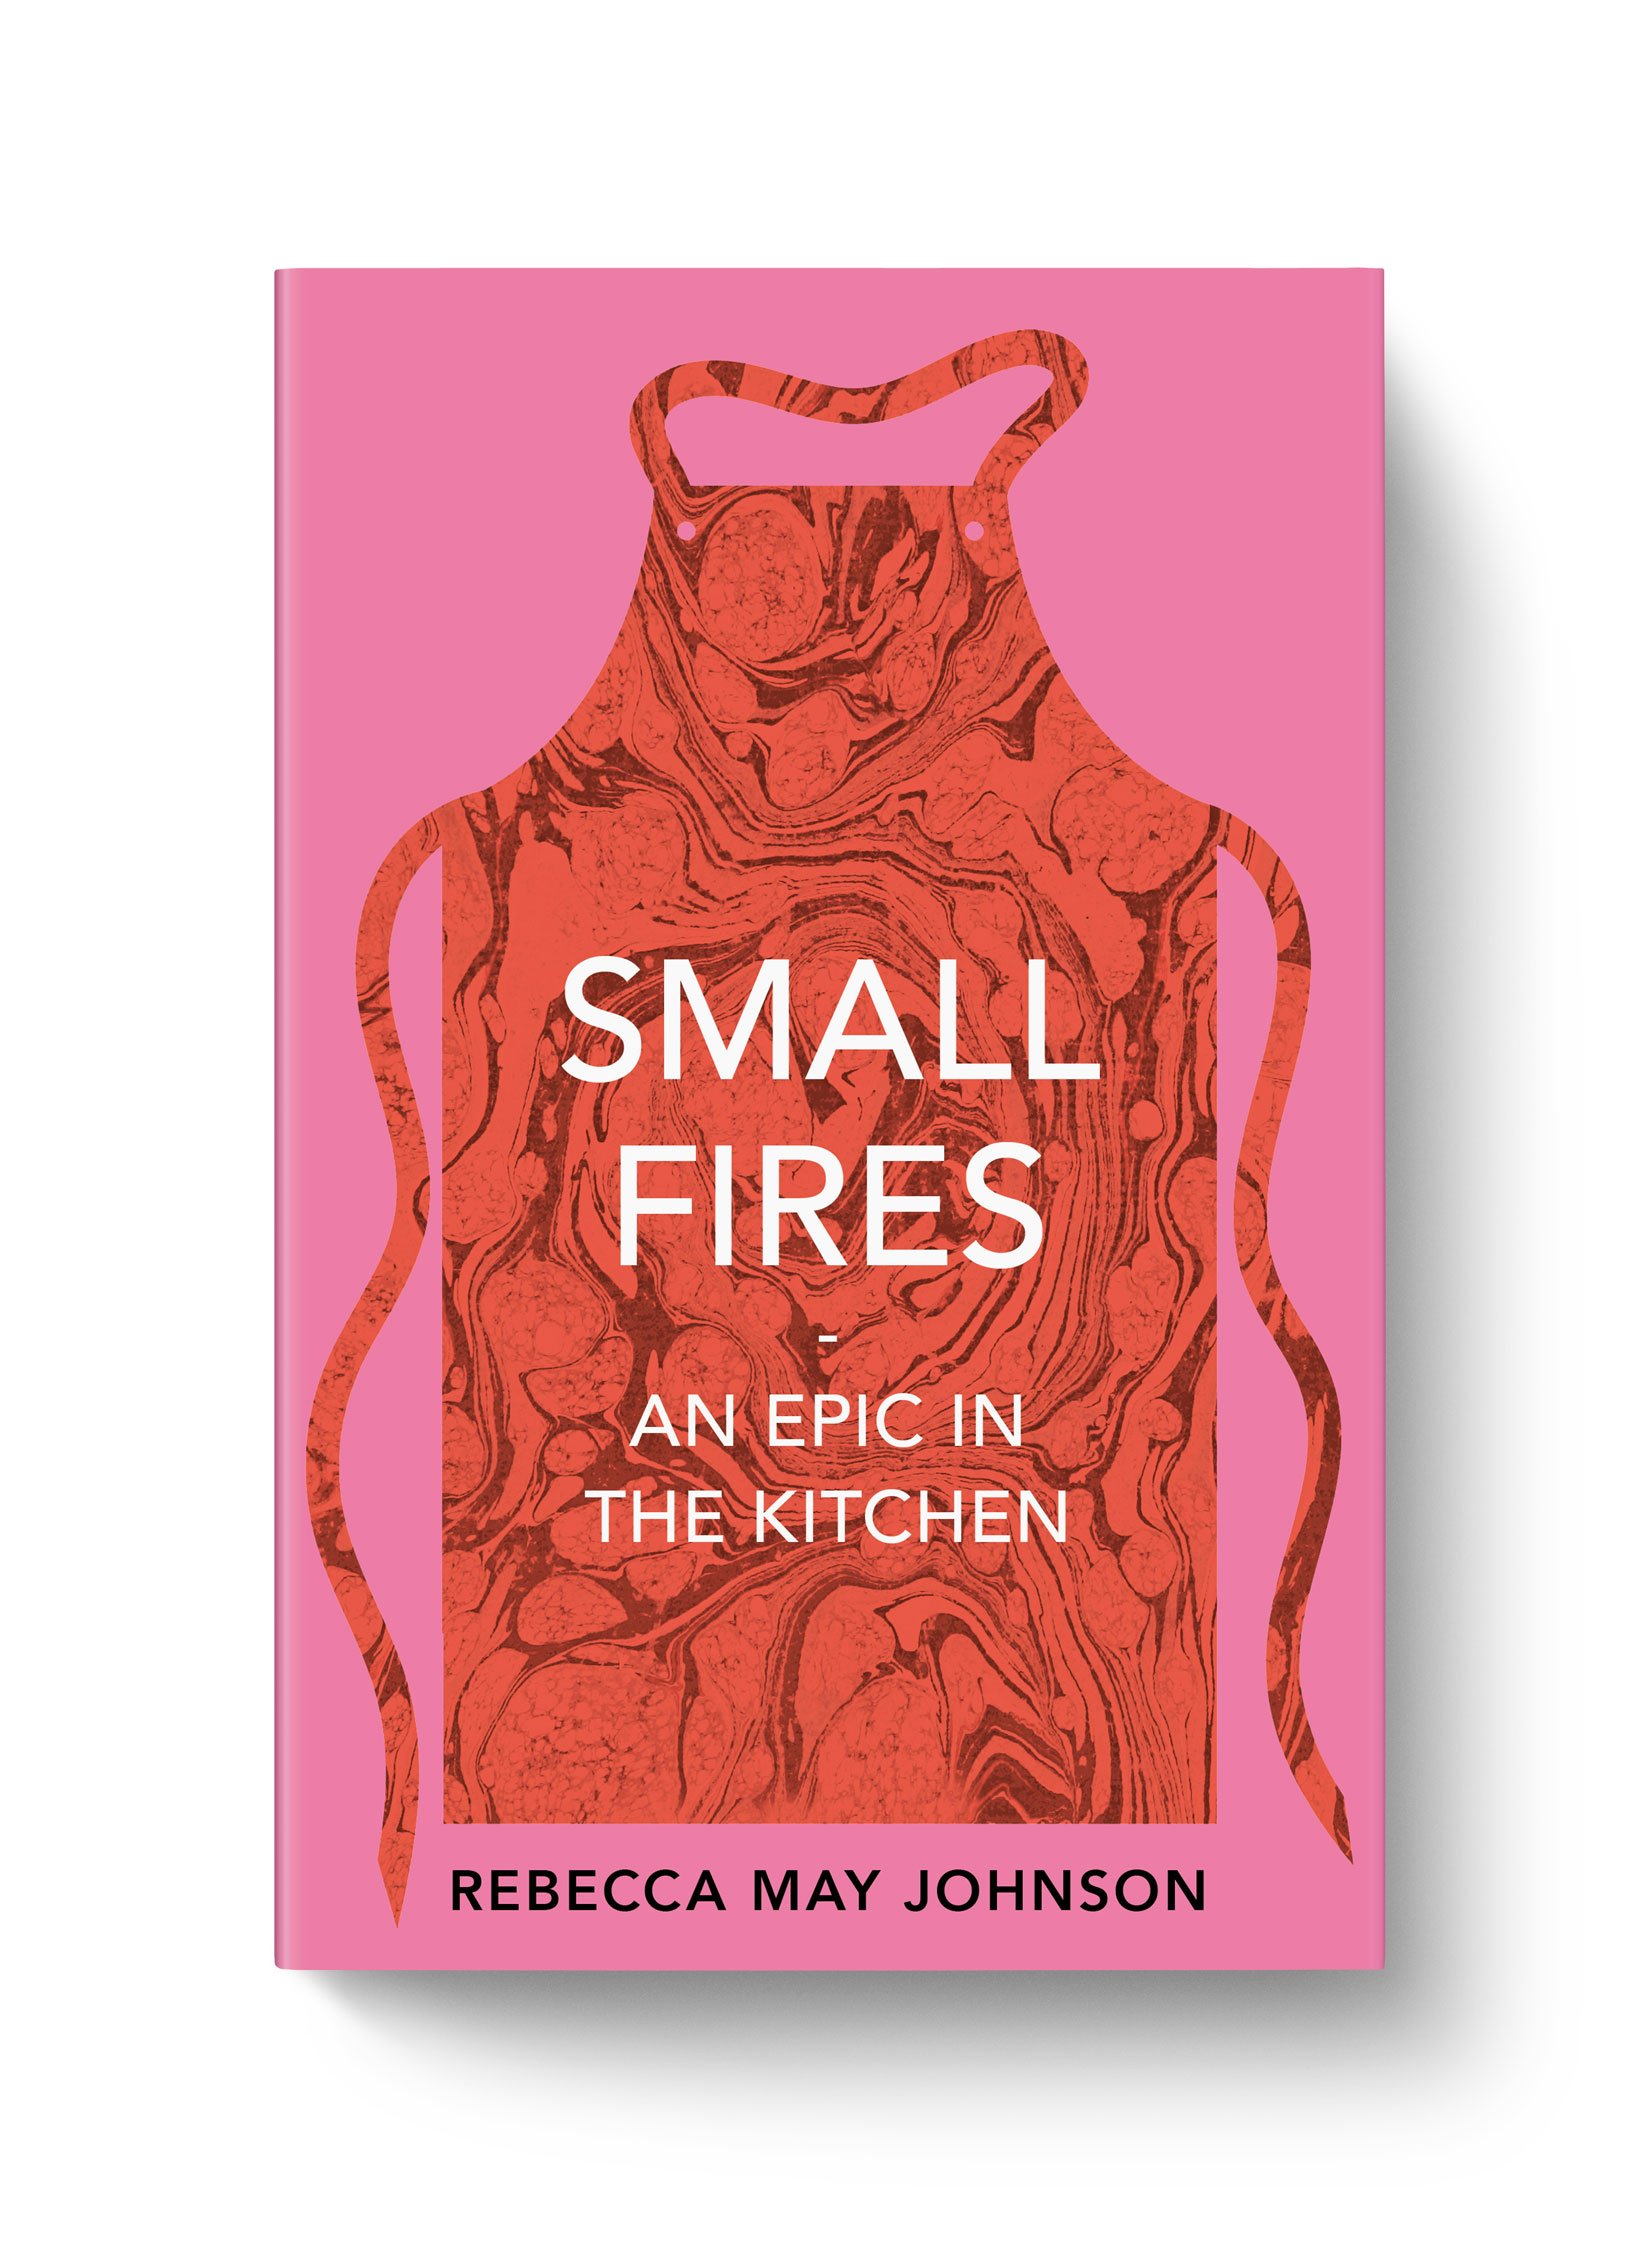   Small Fires  Rebecca May Johnson  Pushkin Press 